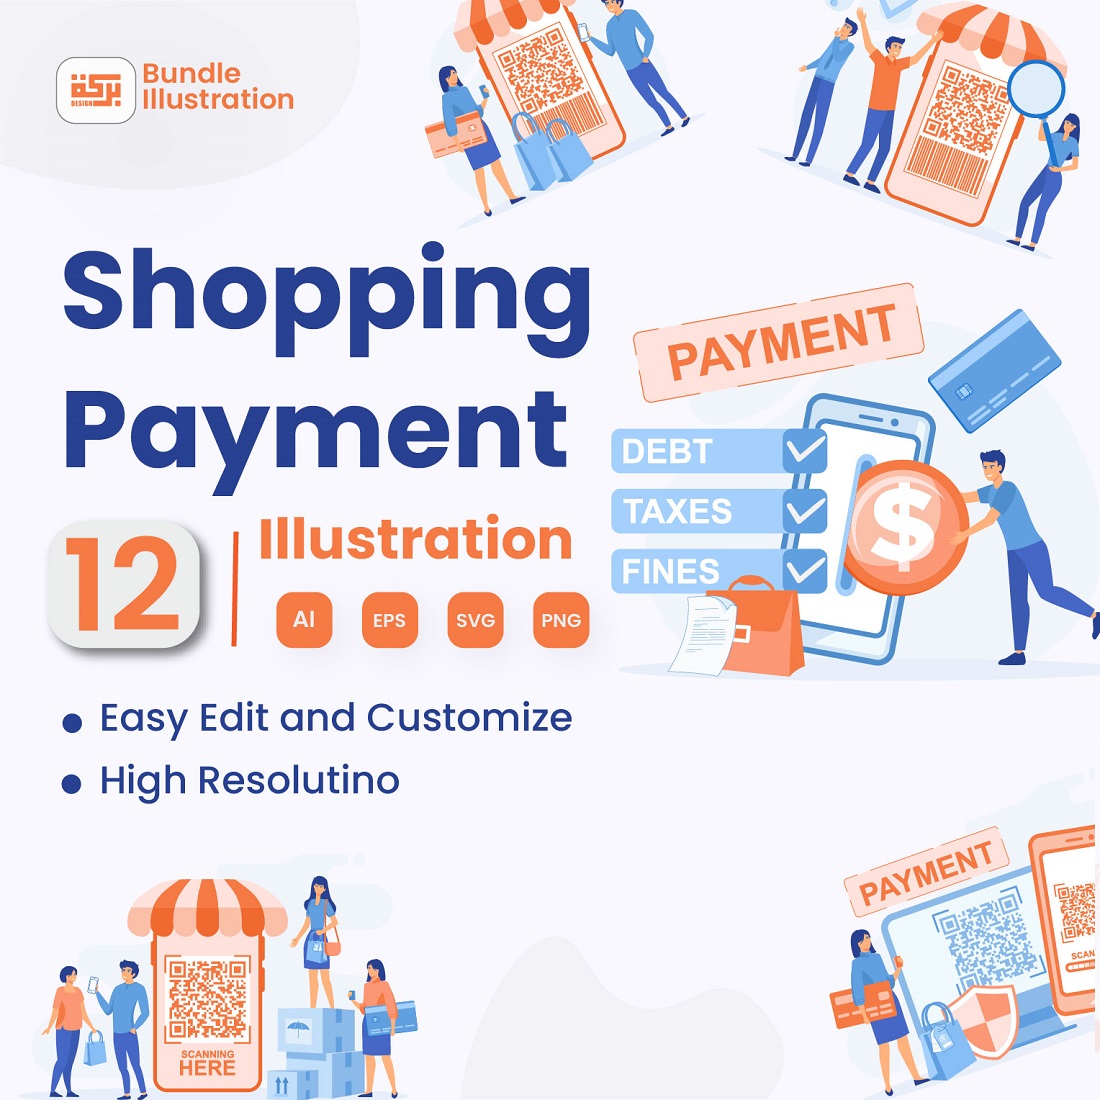 Payment Method Illustration Design cover image.